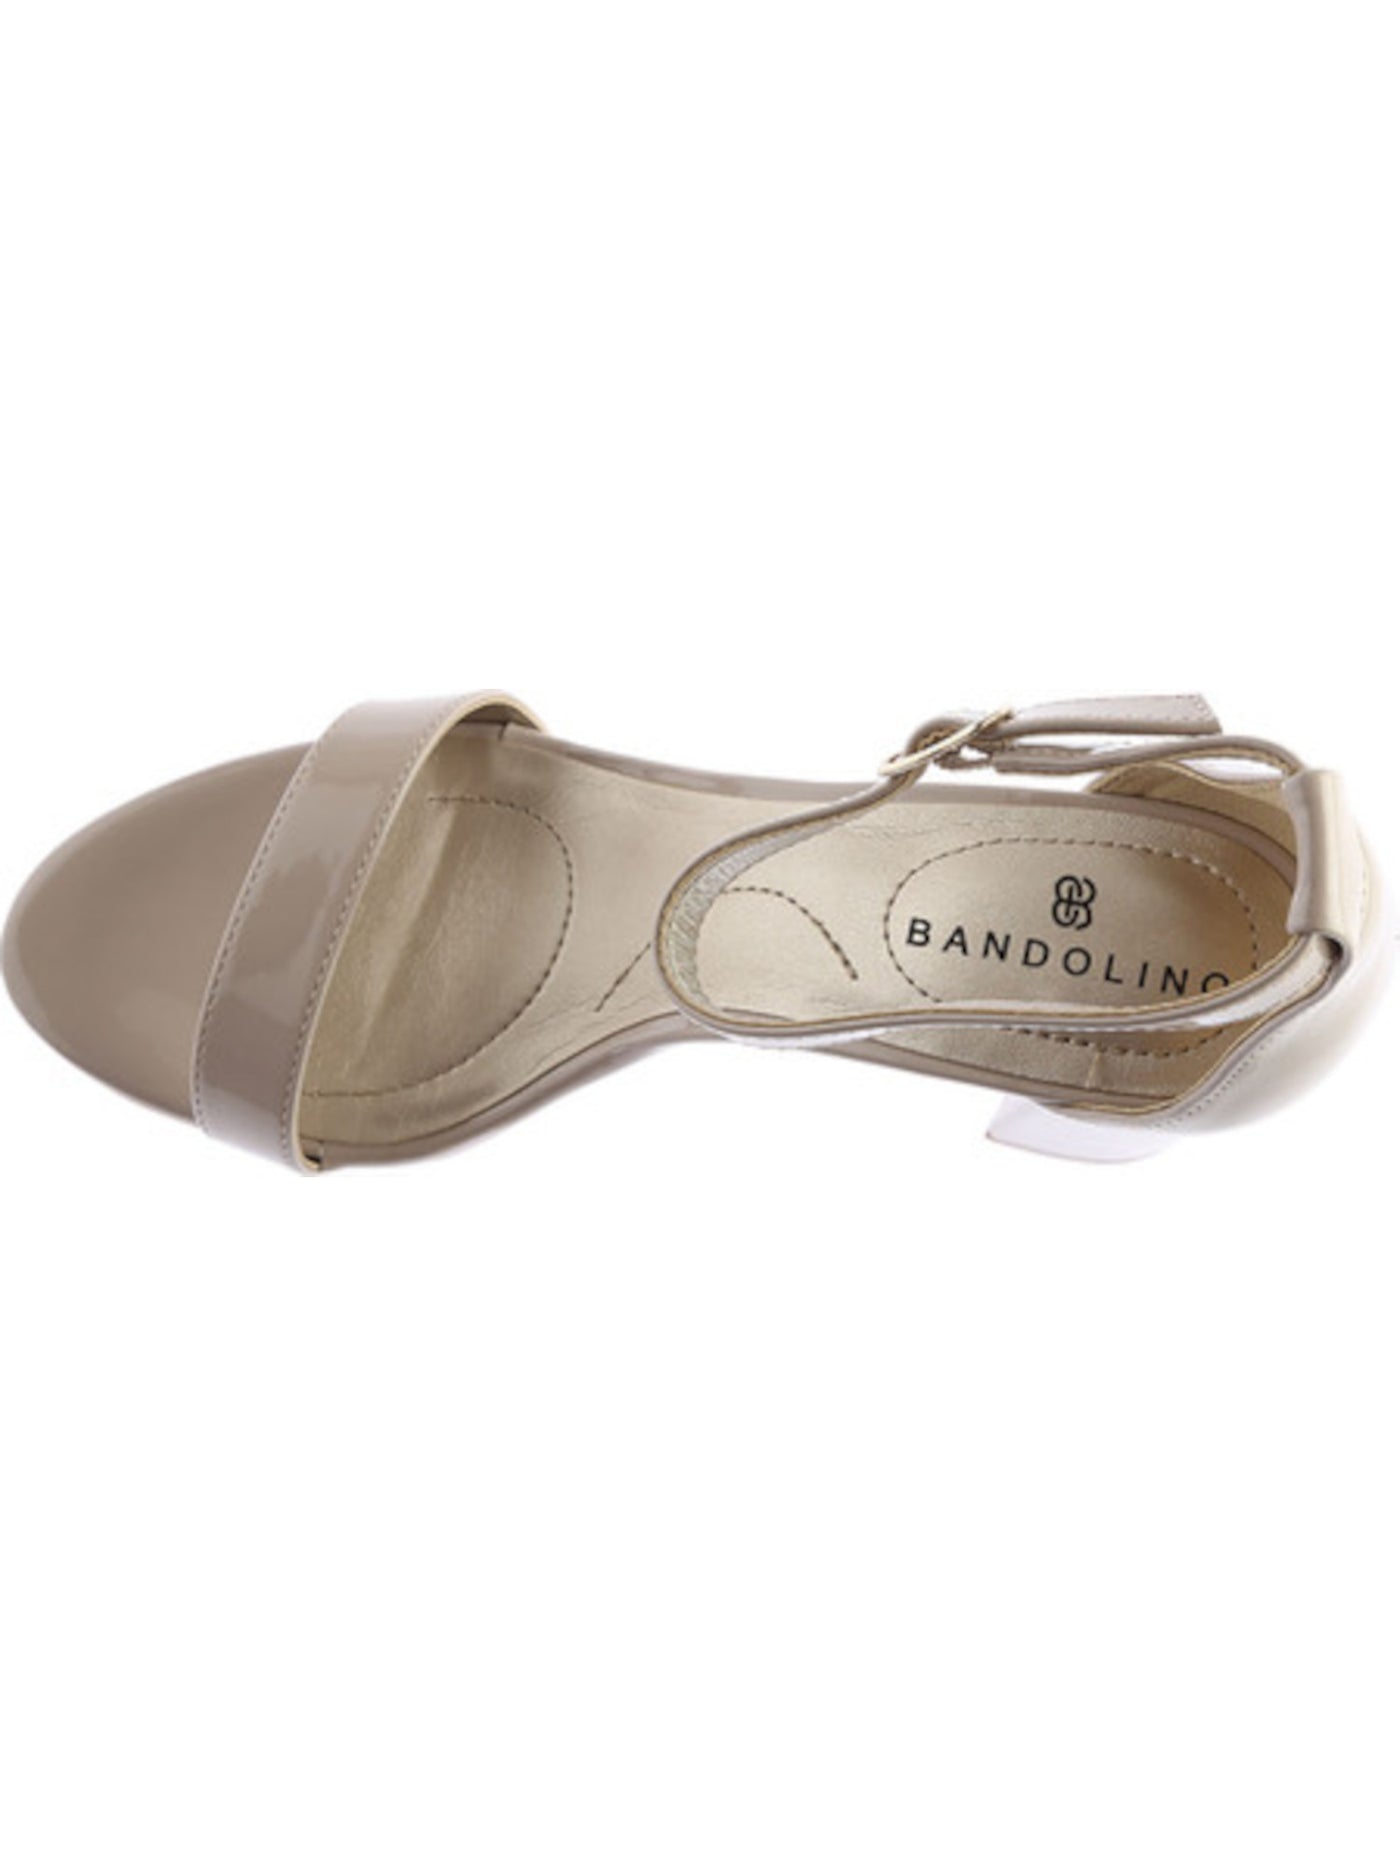 BANDOLINO Womens Beige Ankle Strap Comfort Armory Round Toe Block Heel Buckle Dress Sandals 5 M